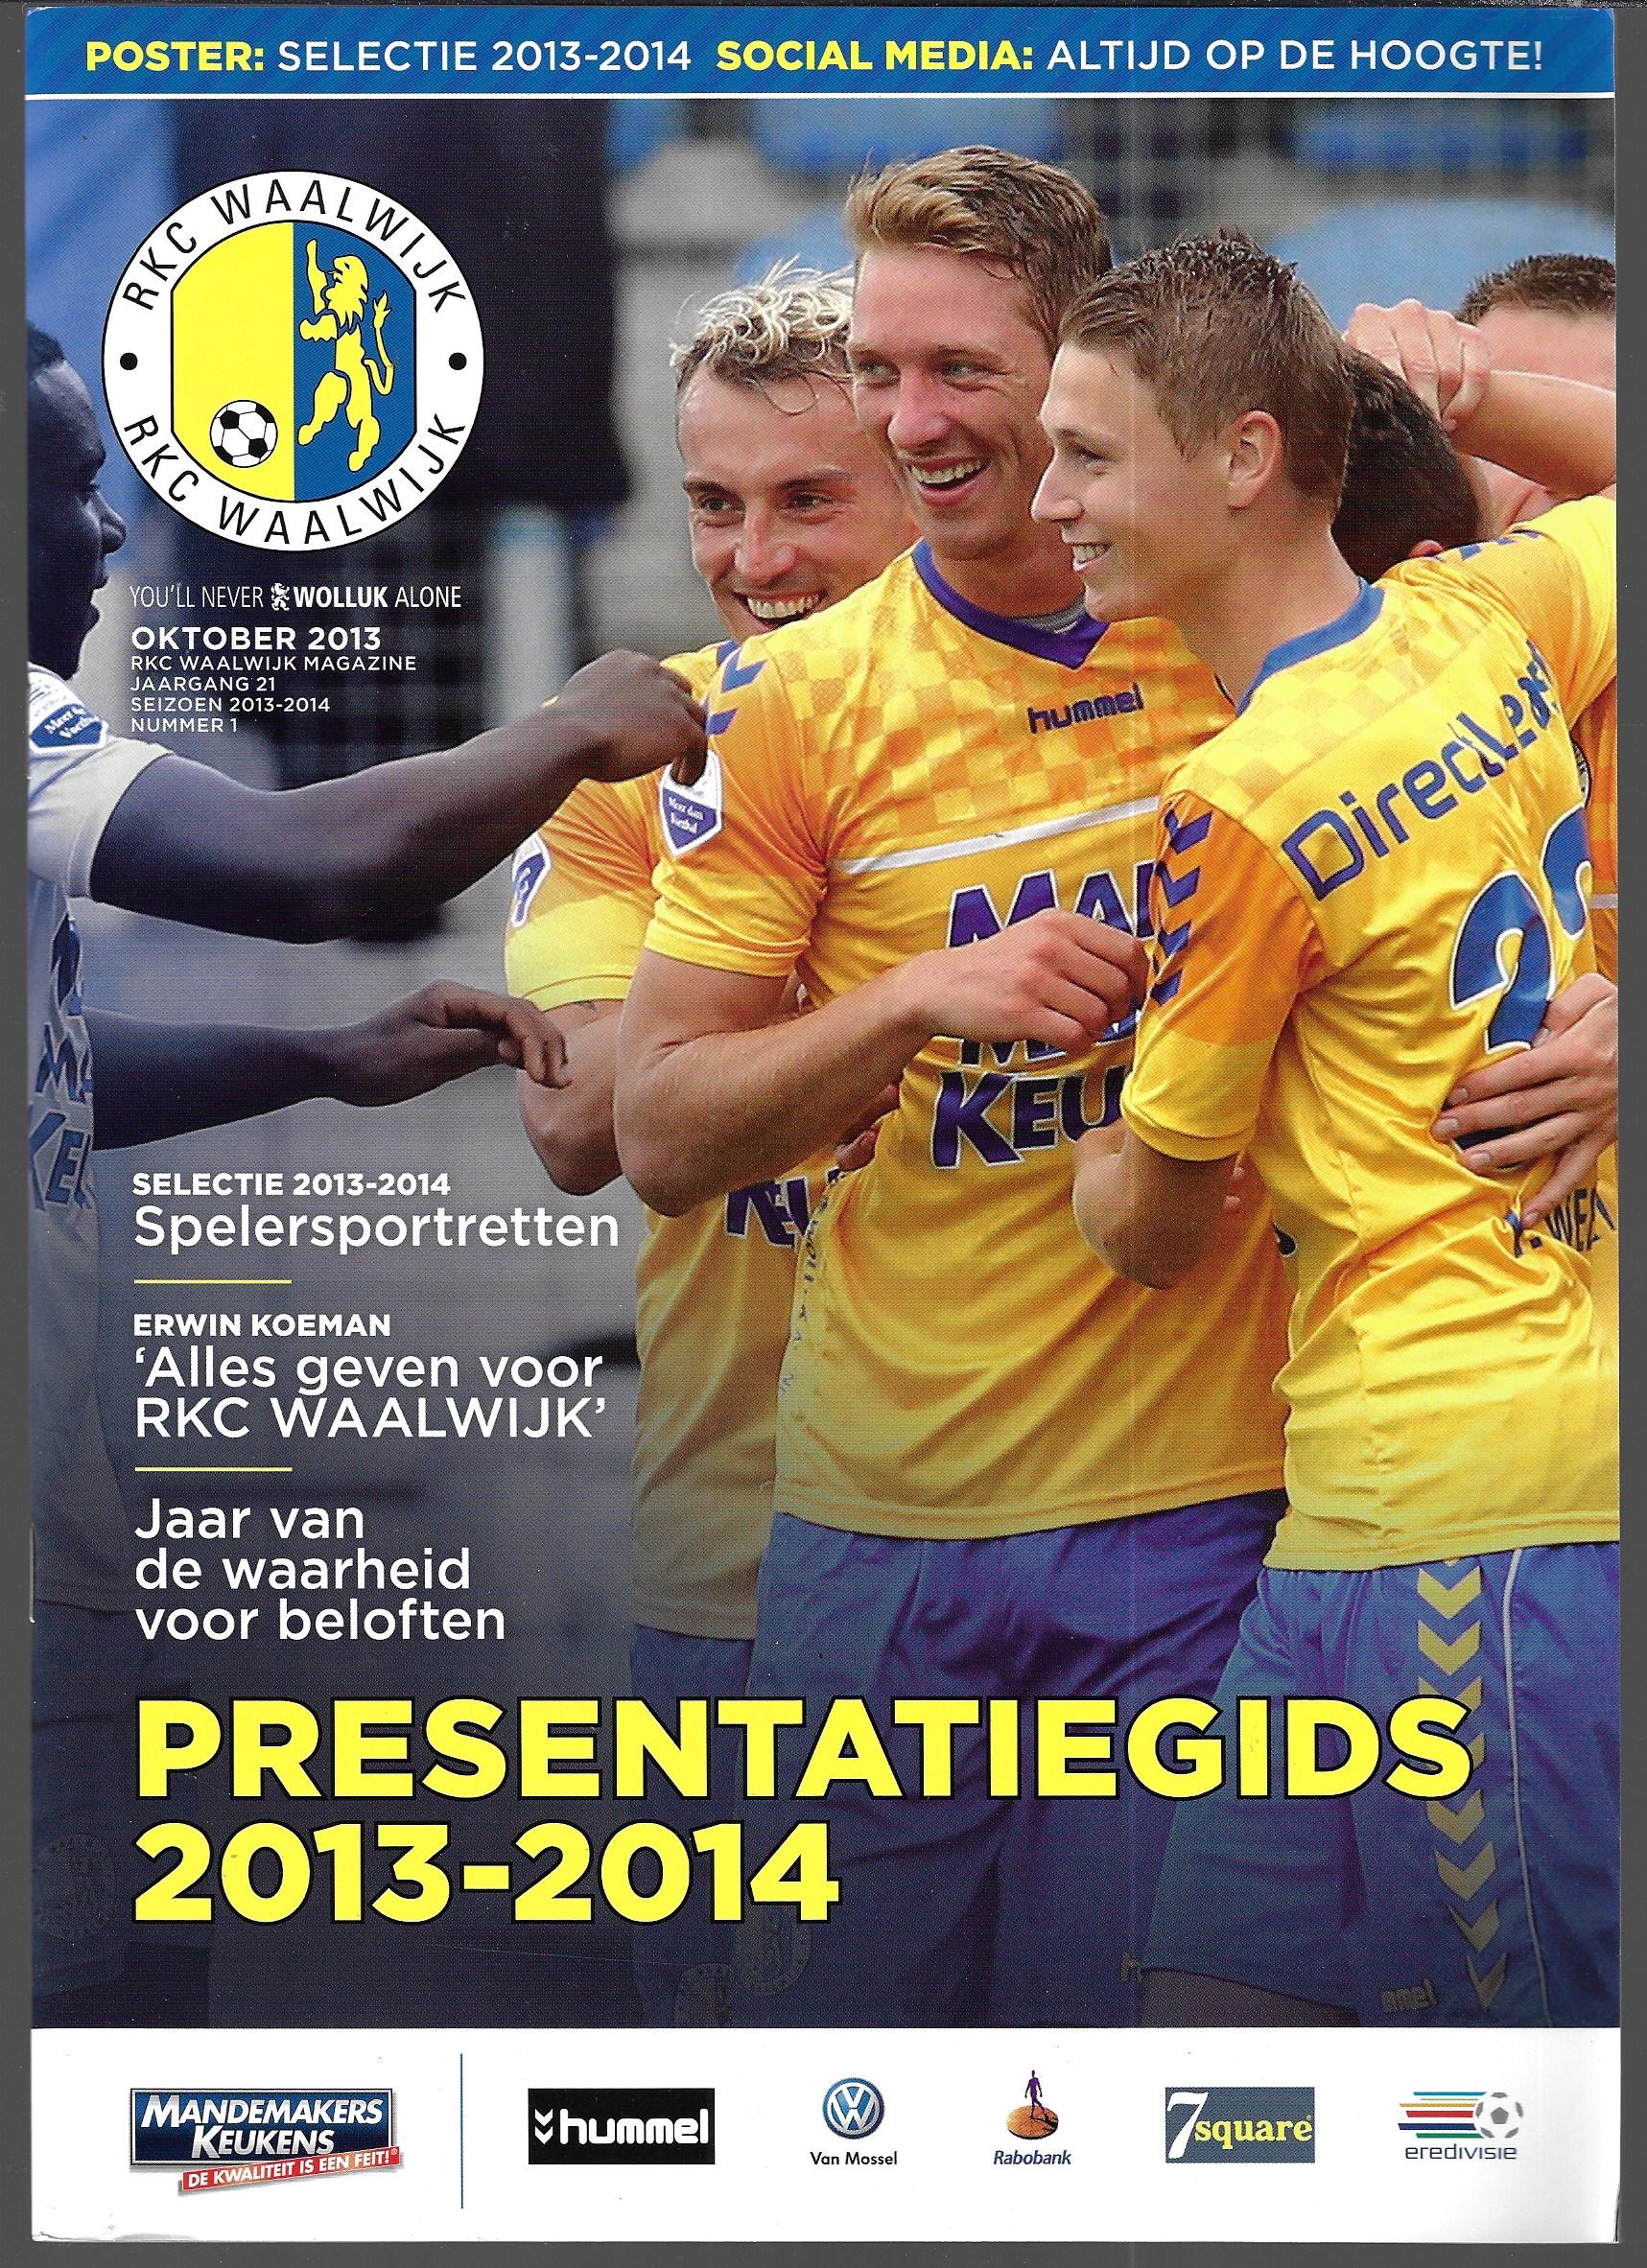  - RKC Waalwijk Presentatiegids 2013-2014 -RKC Waalwijk Magazine seizoen 2013-2014 nummer 1